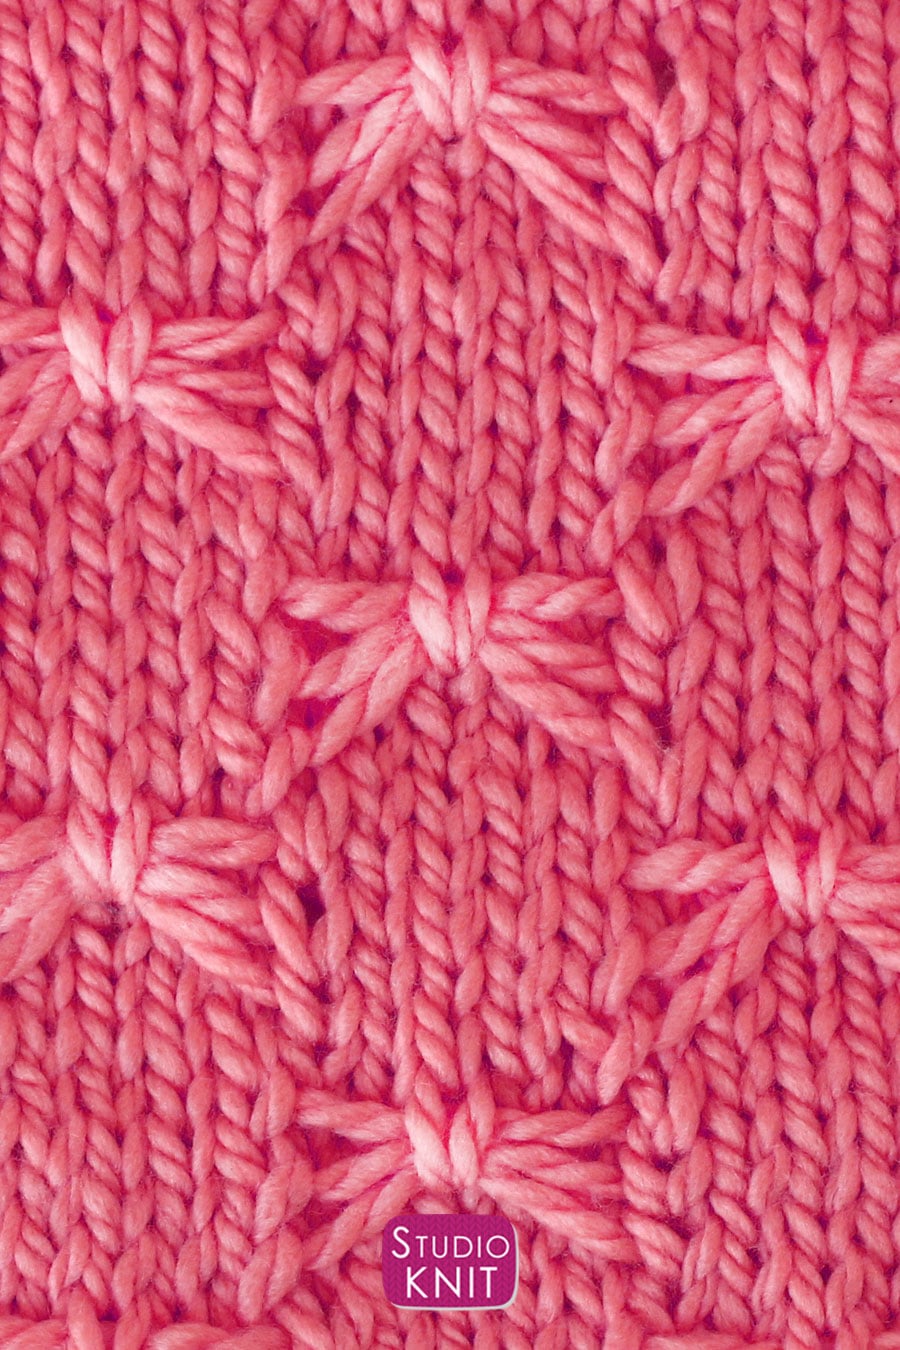 Butterfly Stitch Knitting Pattern